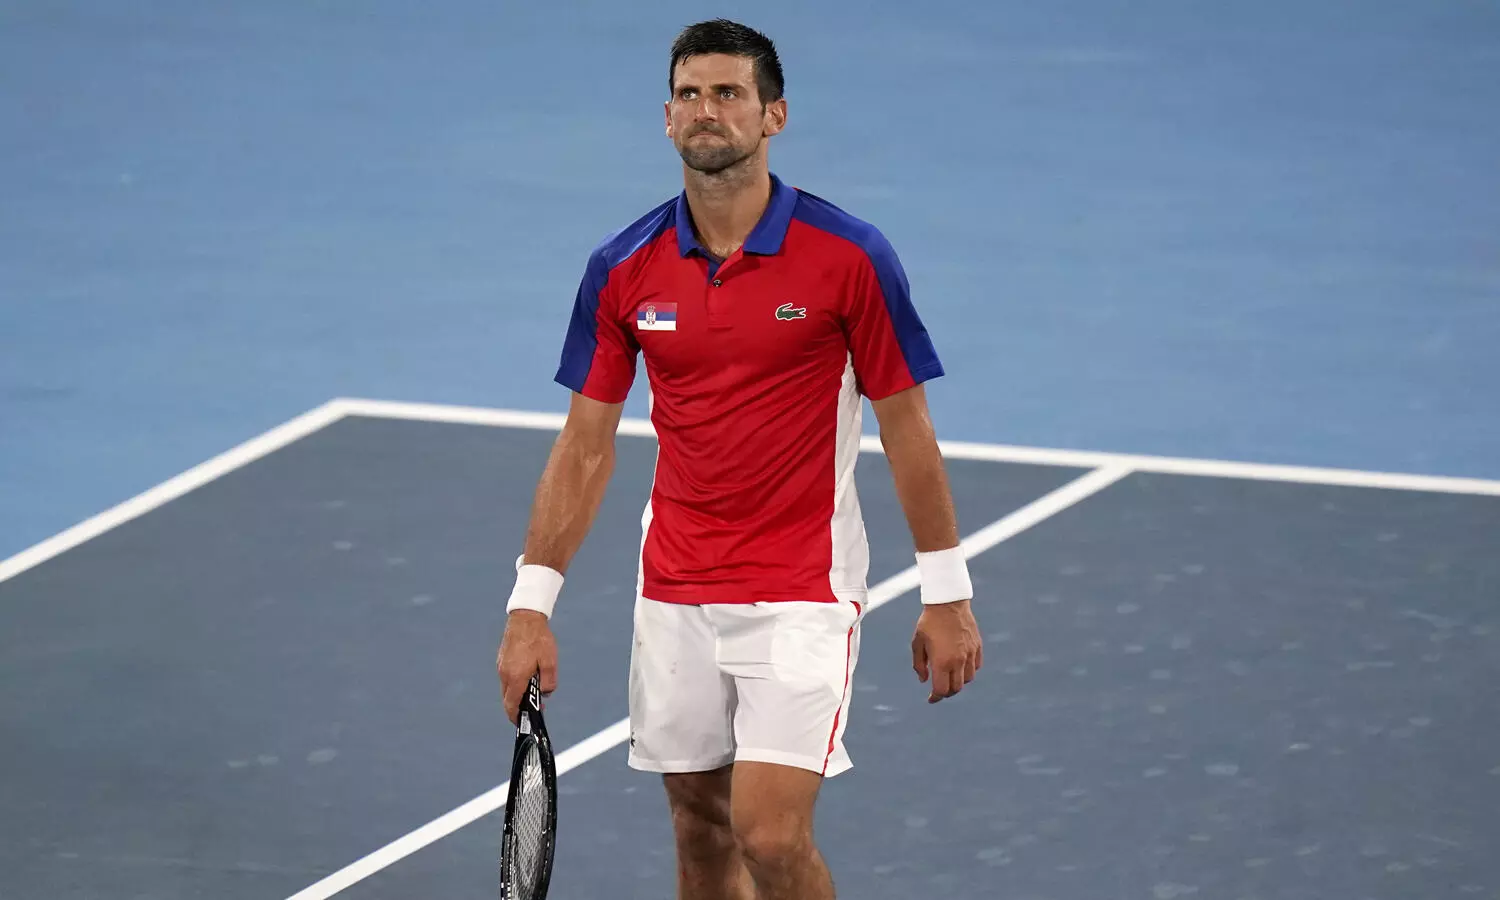 Tokyo Olympics: World No. 1 Novak Djokovic loses to Germanys Alexander Zverev